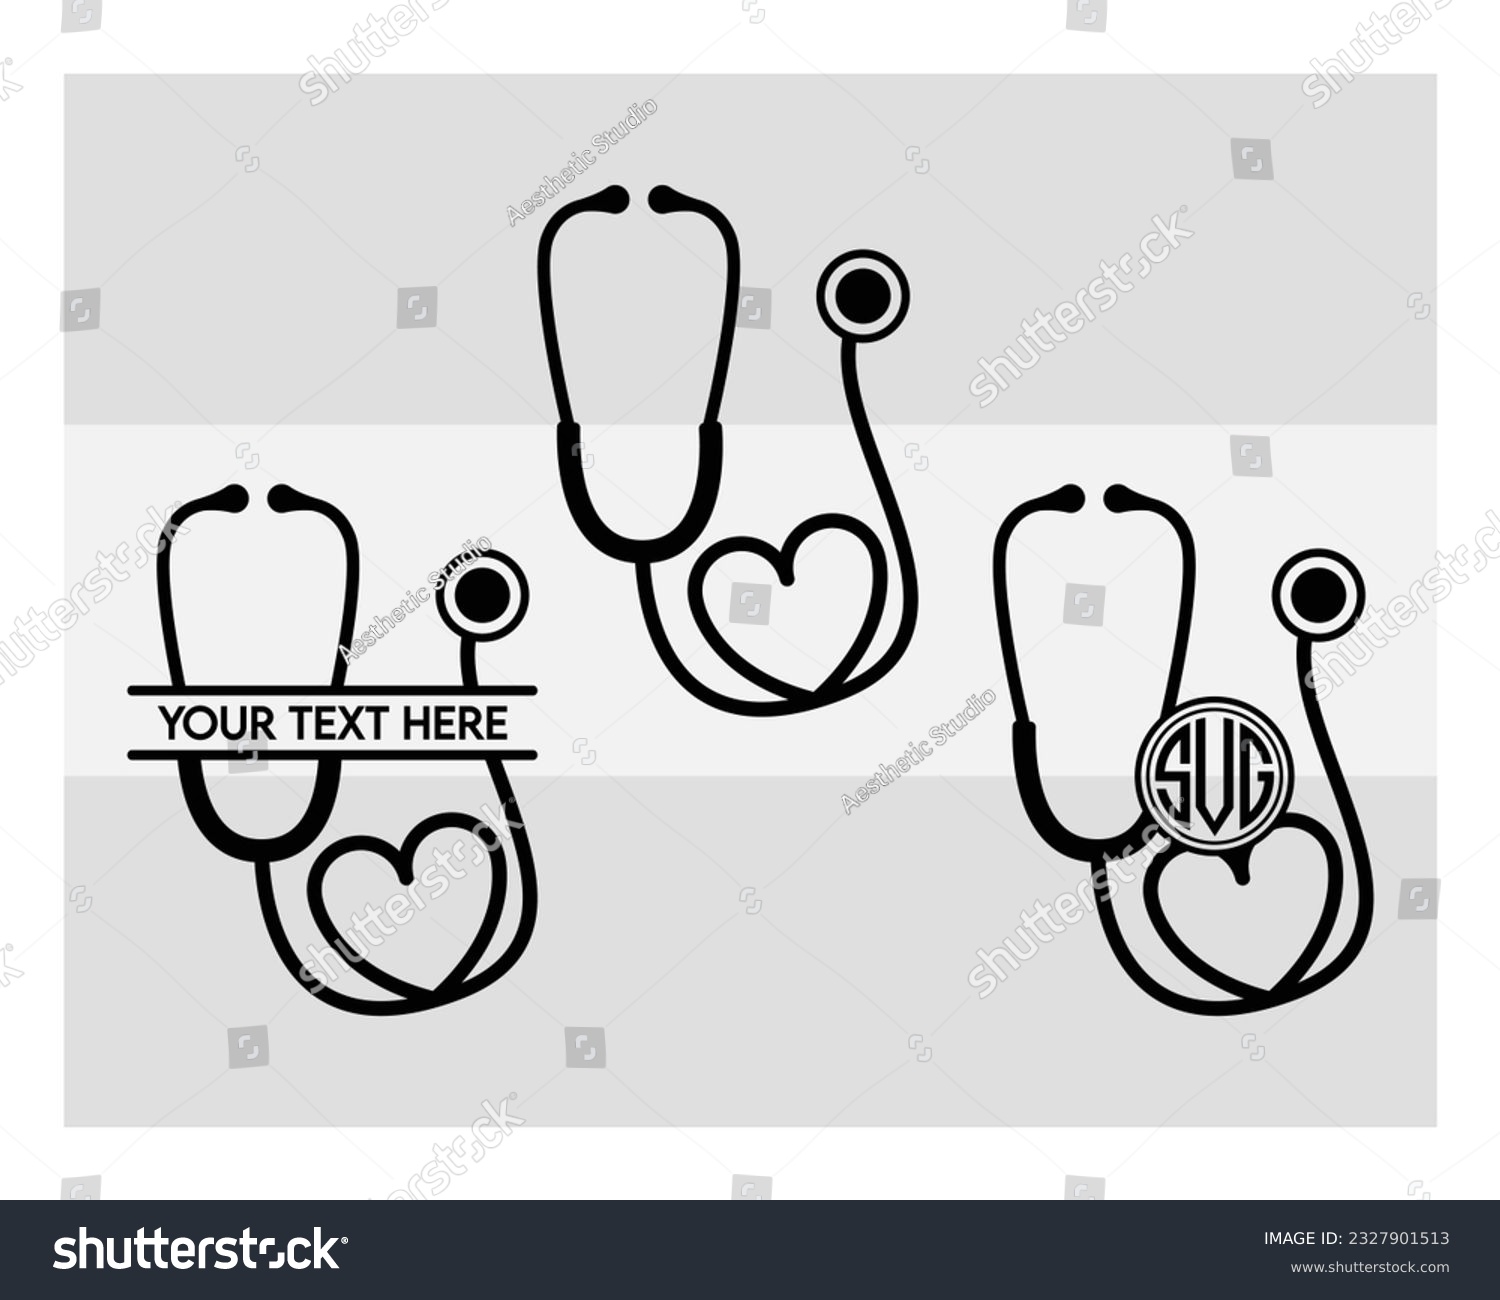 SVG of Heart Stethoscope Svg, SVG Bundle, Heart Beat, Stethoscope Svg, Circut Cut Files Silhouette, Nurse, Stethoscope Health Heart, Medical | Doctor Svg, Lifeline, Science, Heartbeat Clipart, svg